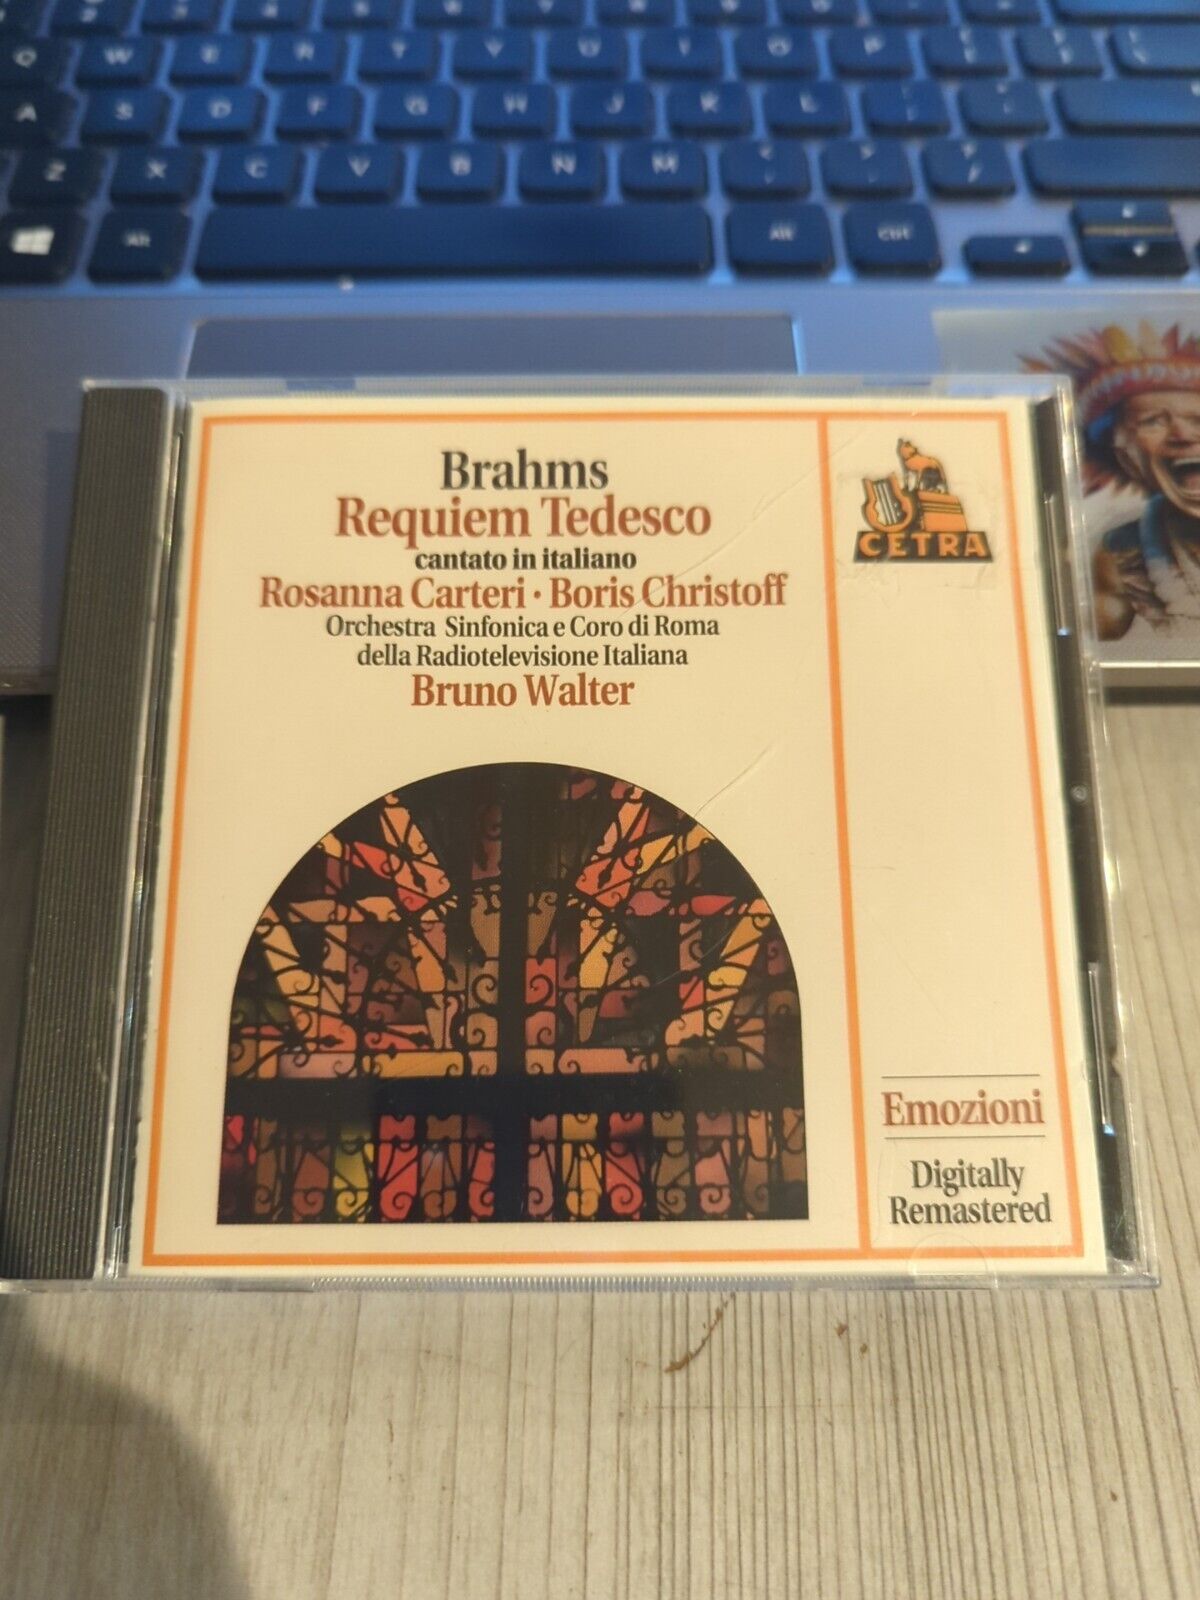 Opera CD2413 Brahms Requeim Tedesco Rosanna Carteri Boris Christoff Bruno Walter